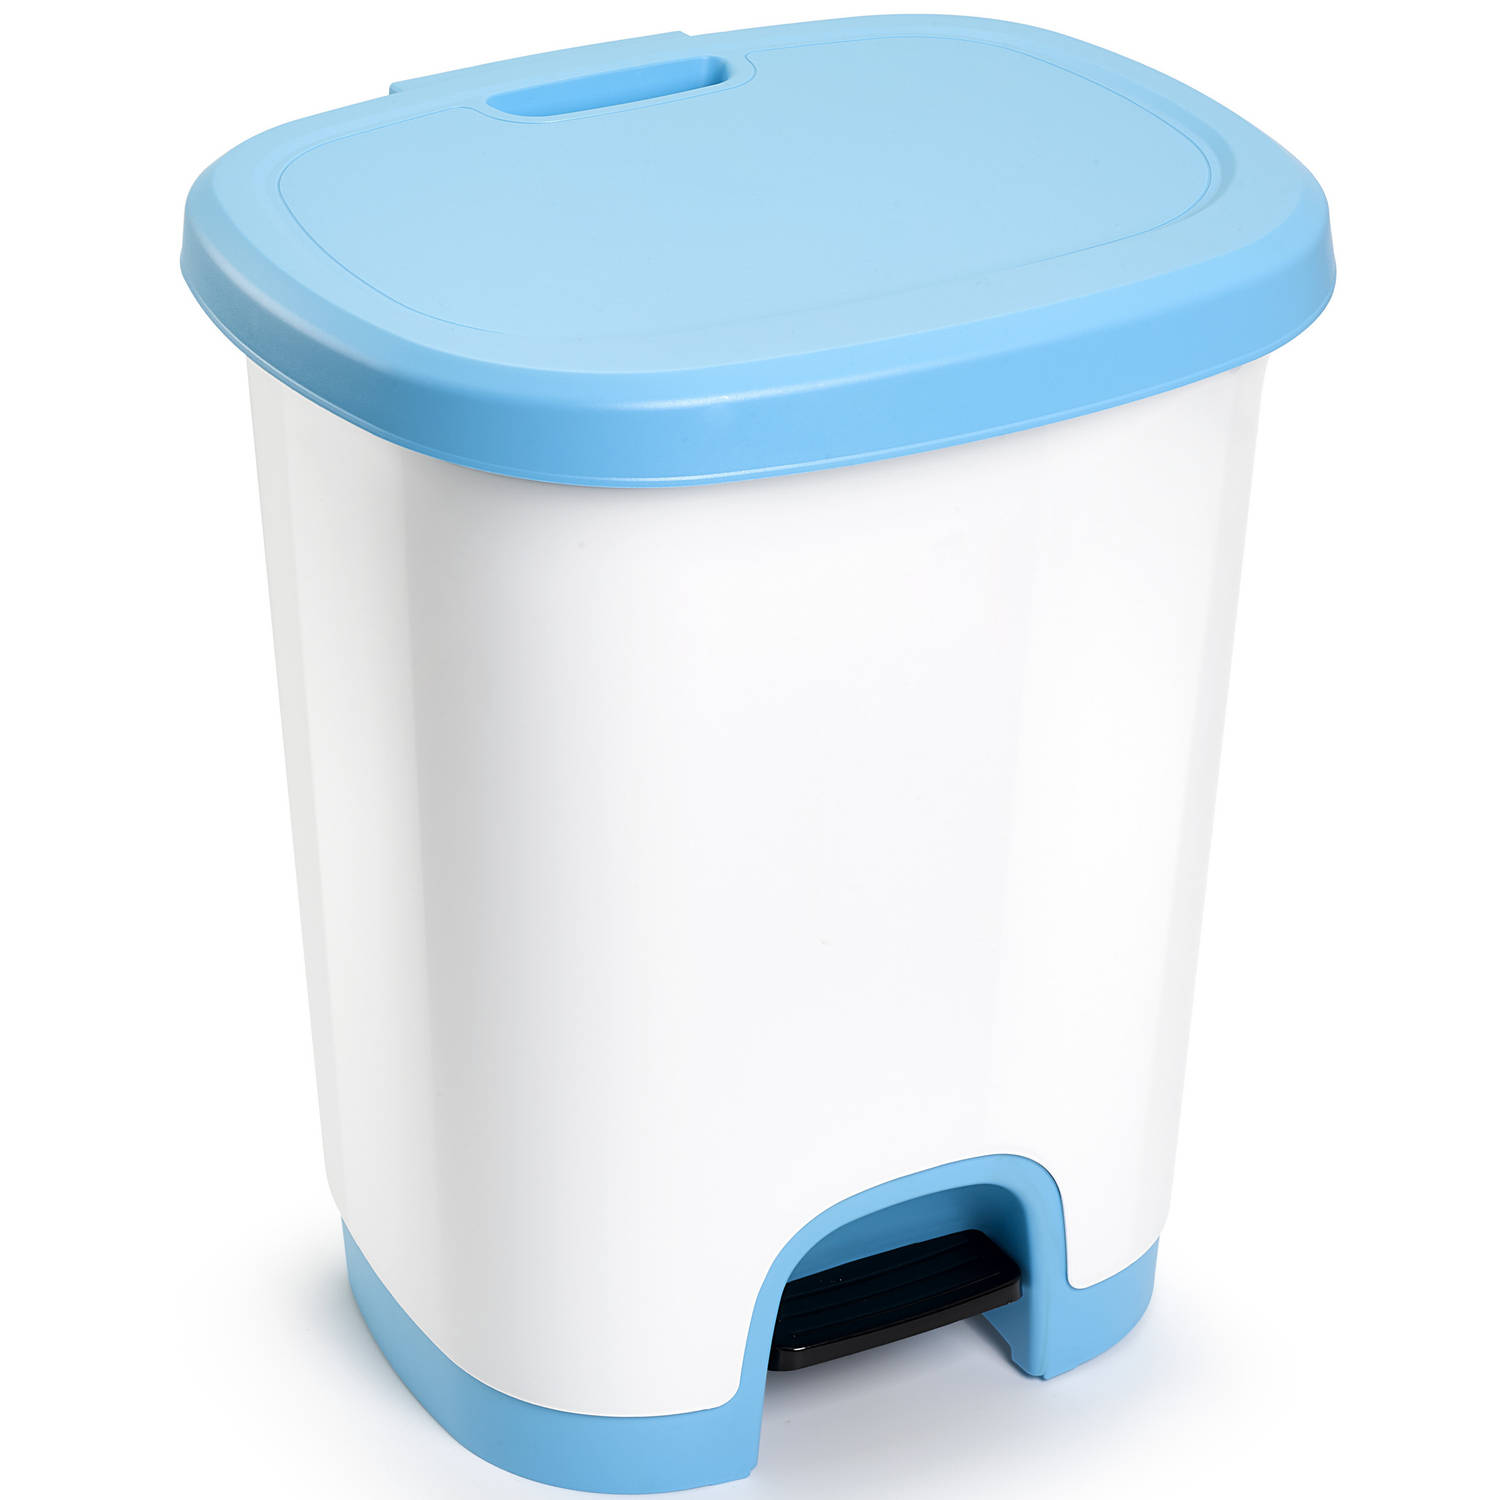 Afvalemmer/vuilnisemmer/pedaalemmer 27 liter in het wit/lichtblauw met deksel en pedaal - Pedaalemmers